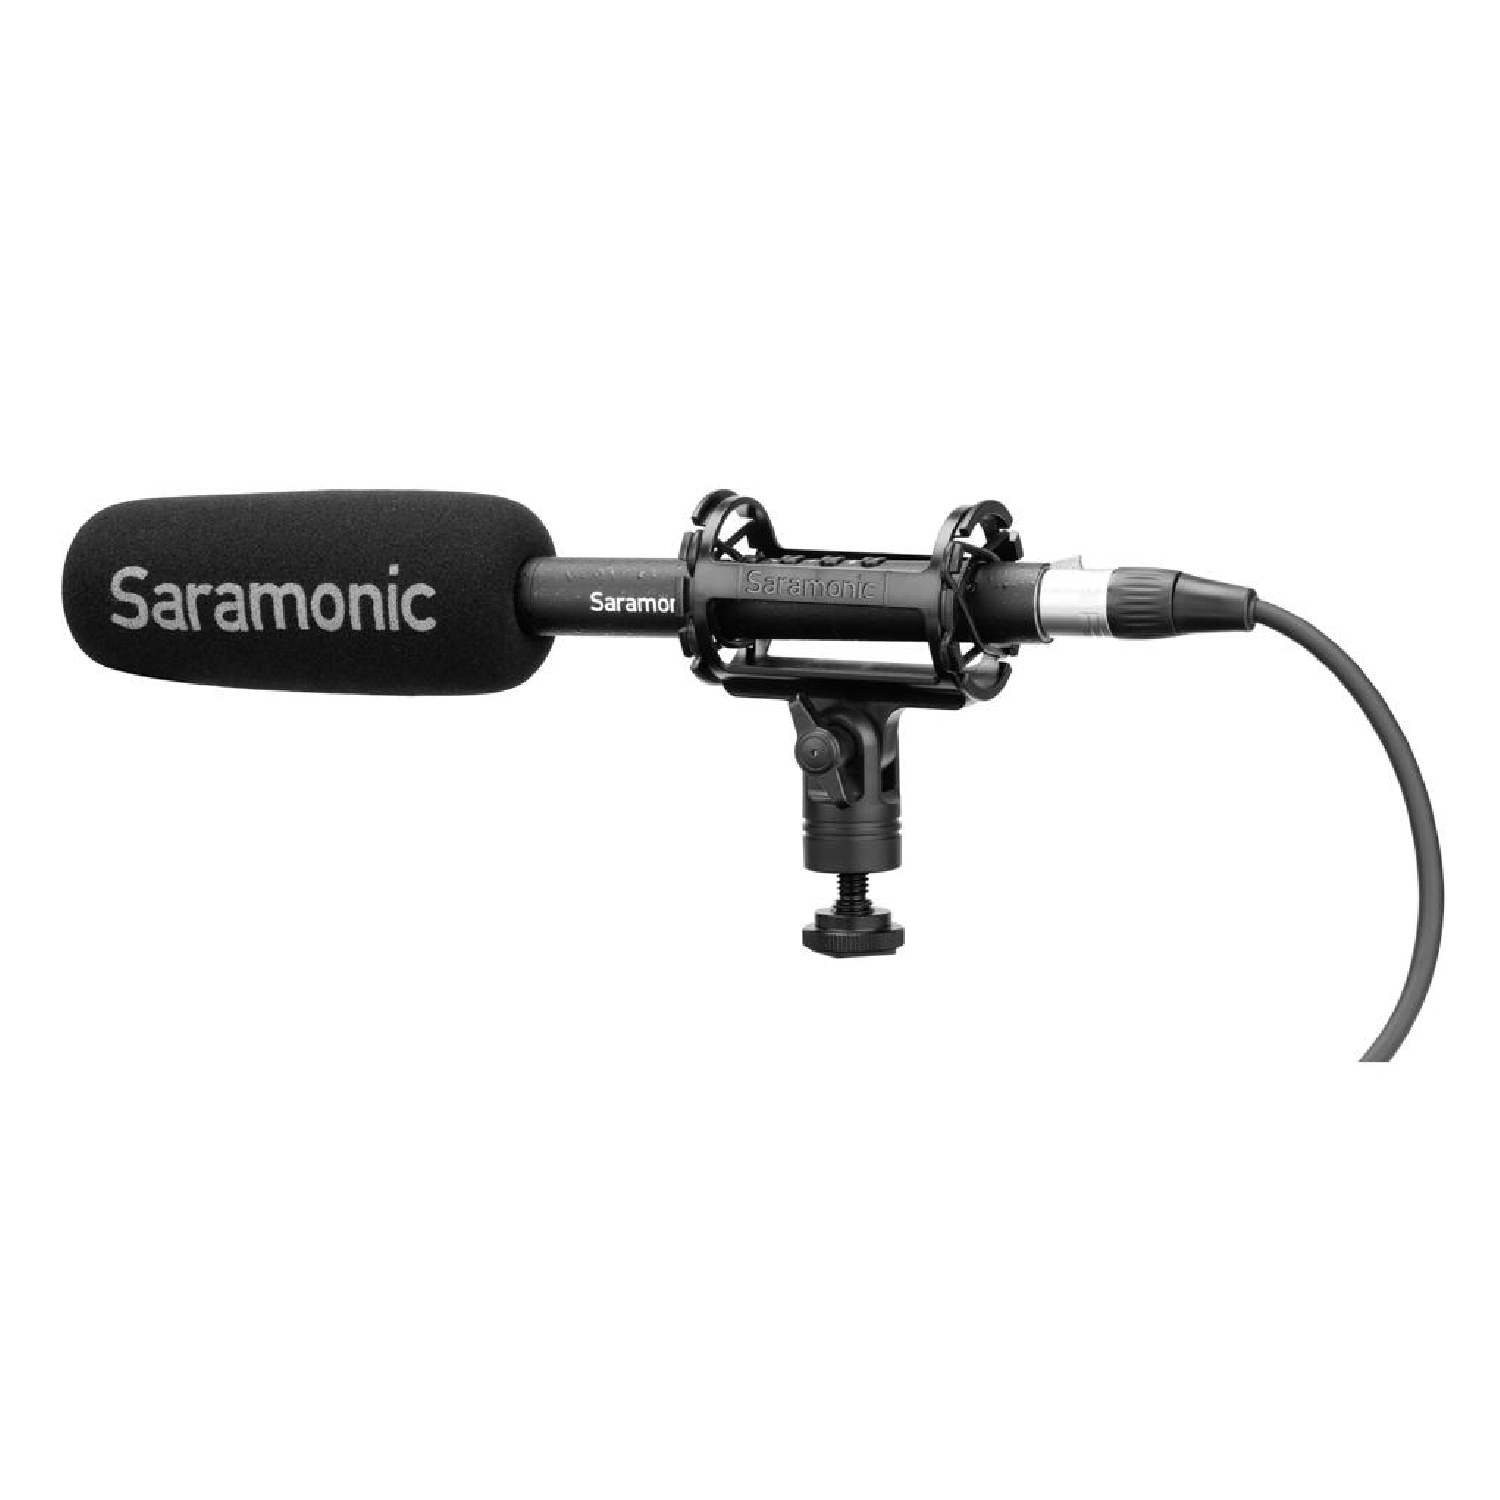 Shotgun Microphone with LI-ION Battery, Low Cut &amp; HI-Boost Filters, Shock Mount, Windscreen with XLR Cable   SOUNDBIRD T3 saramonic